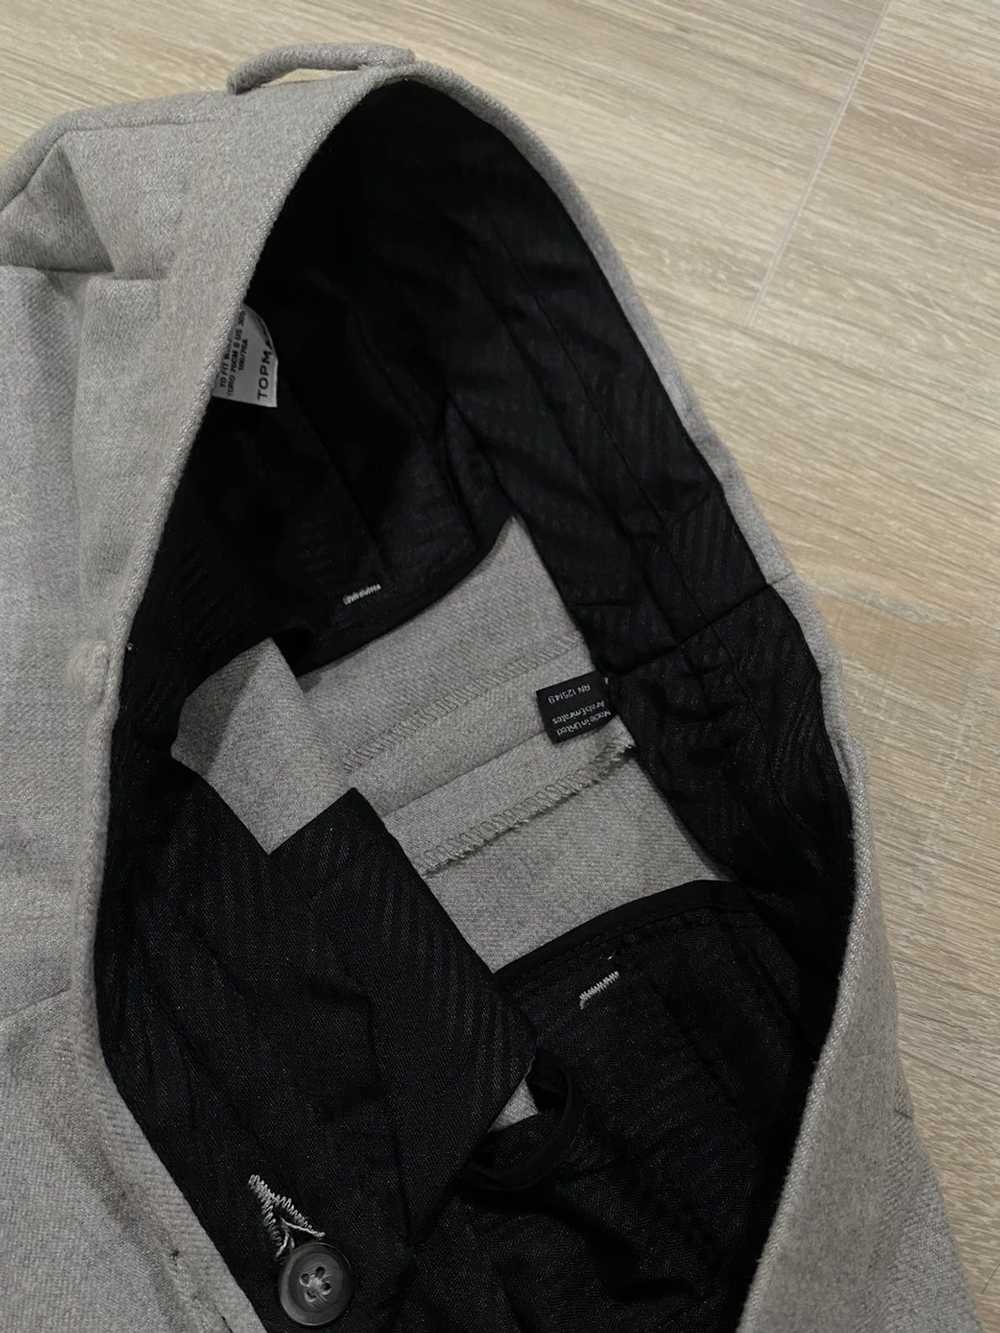 Topman Grey Trouser - image 2